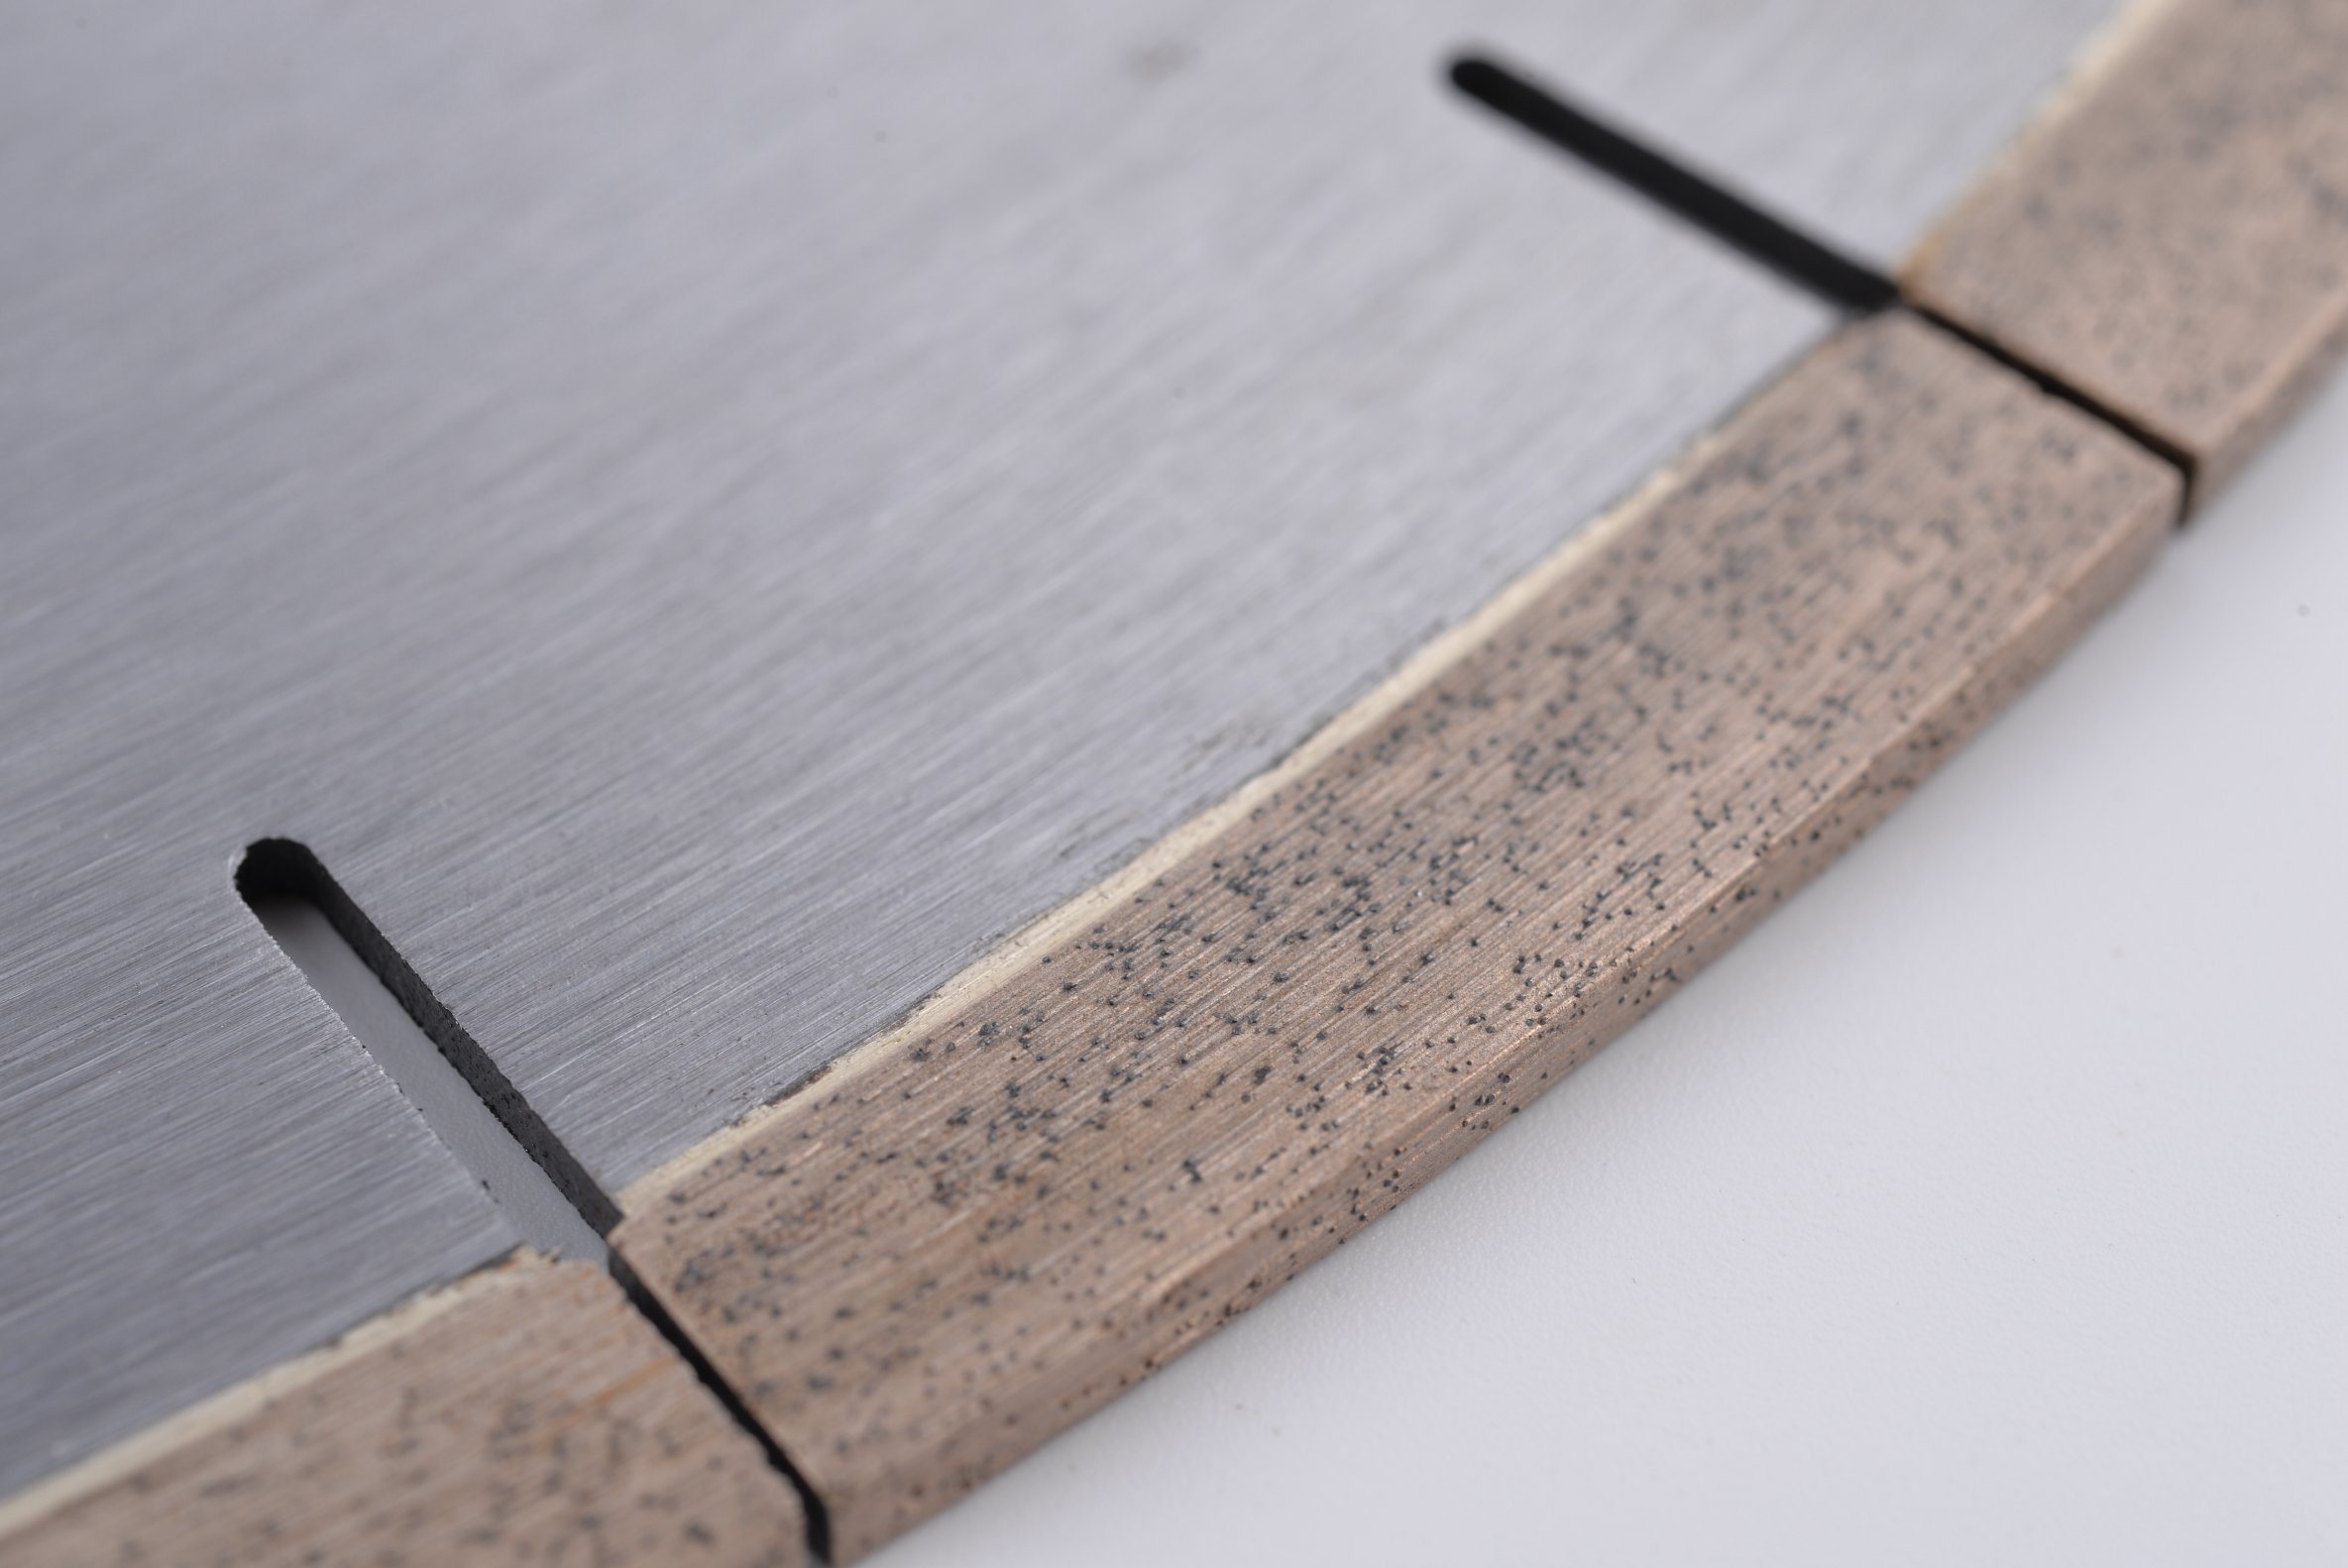 High Quality Circular Diamond Cutting Saw Blade for Engineered Stone